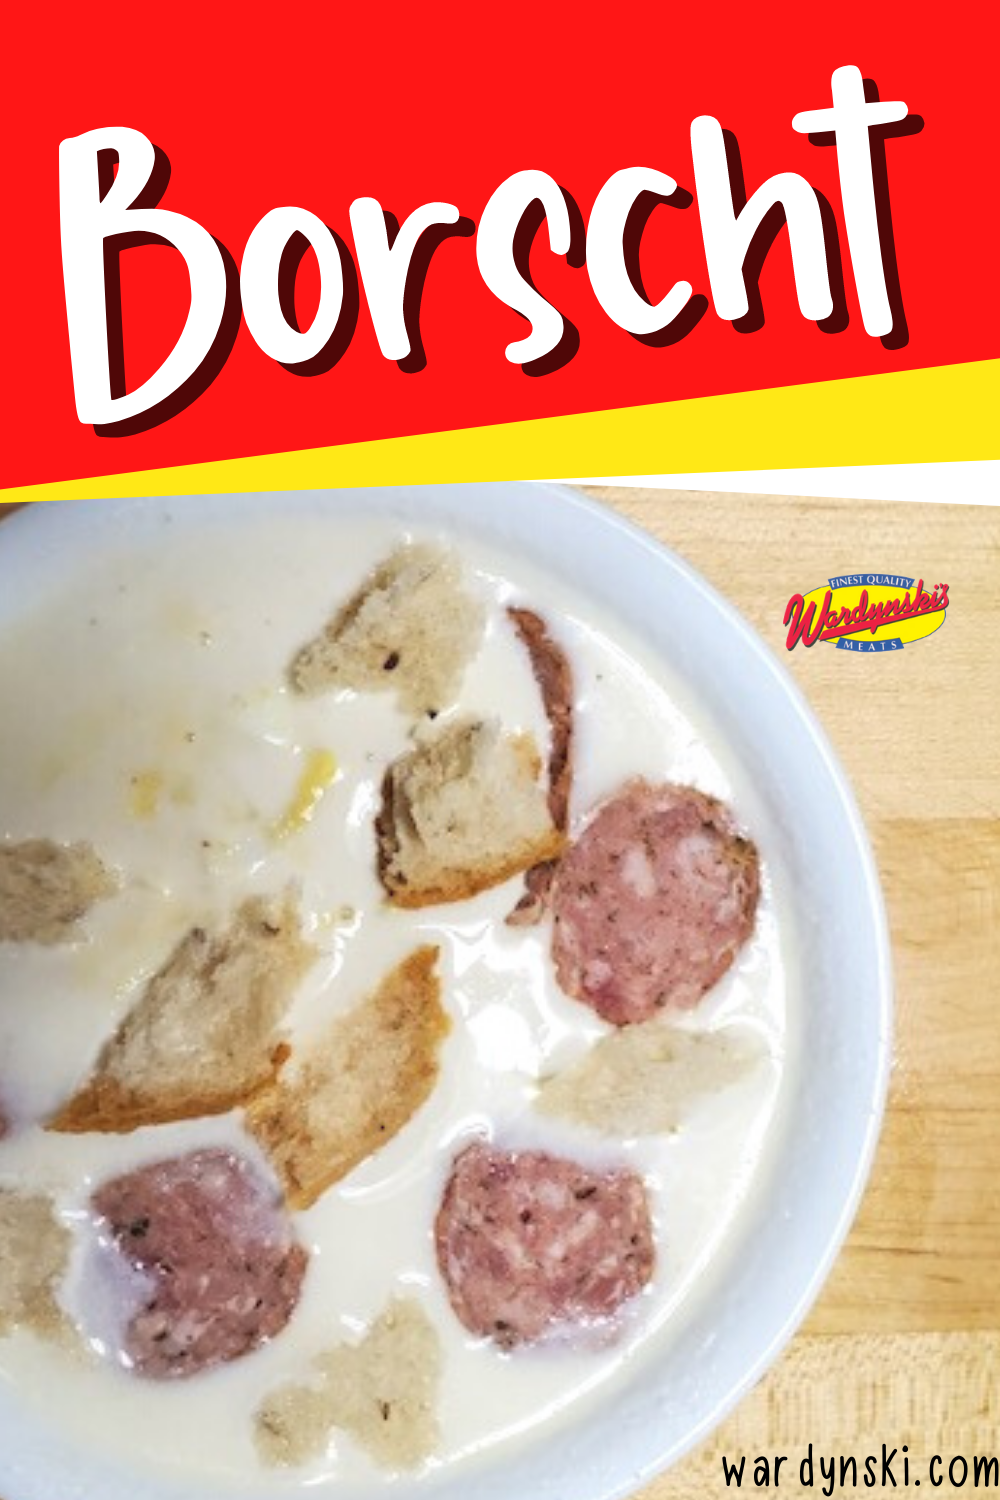 This delicious Borscht recipe uses Wardynski Polish sausage to make a yummy dinner